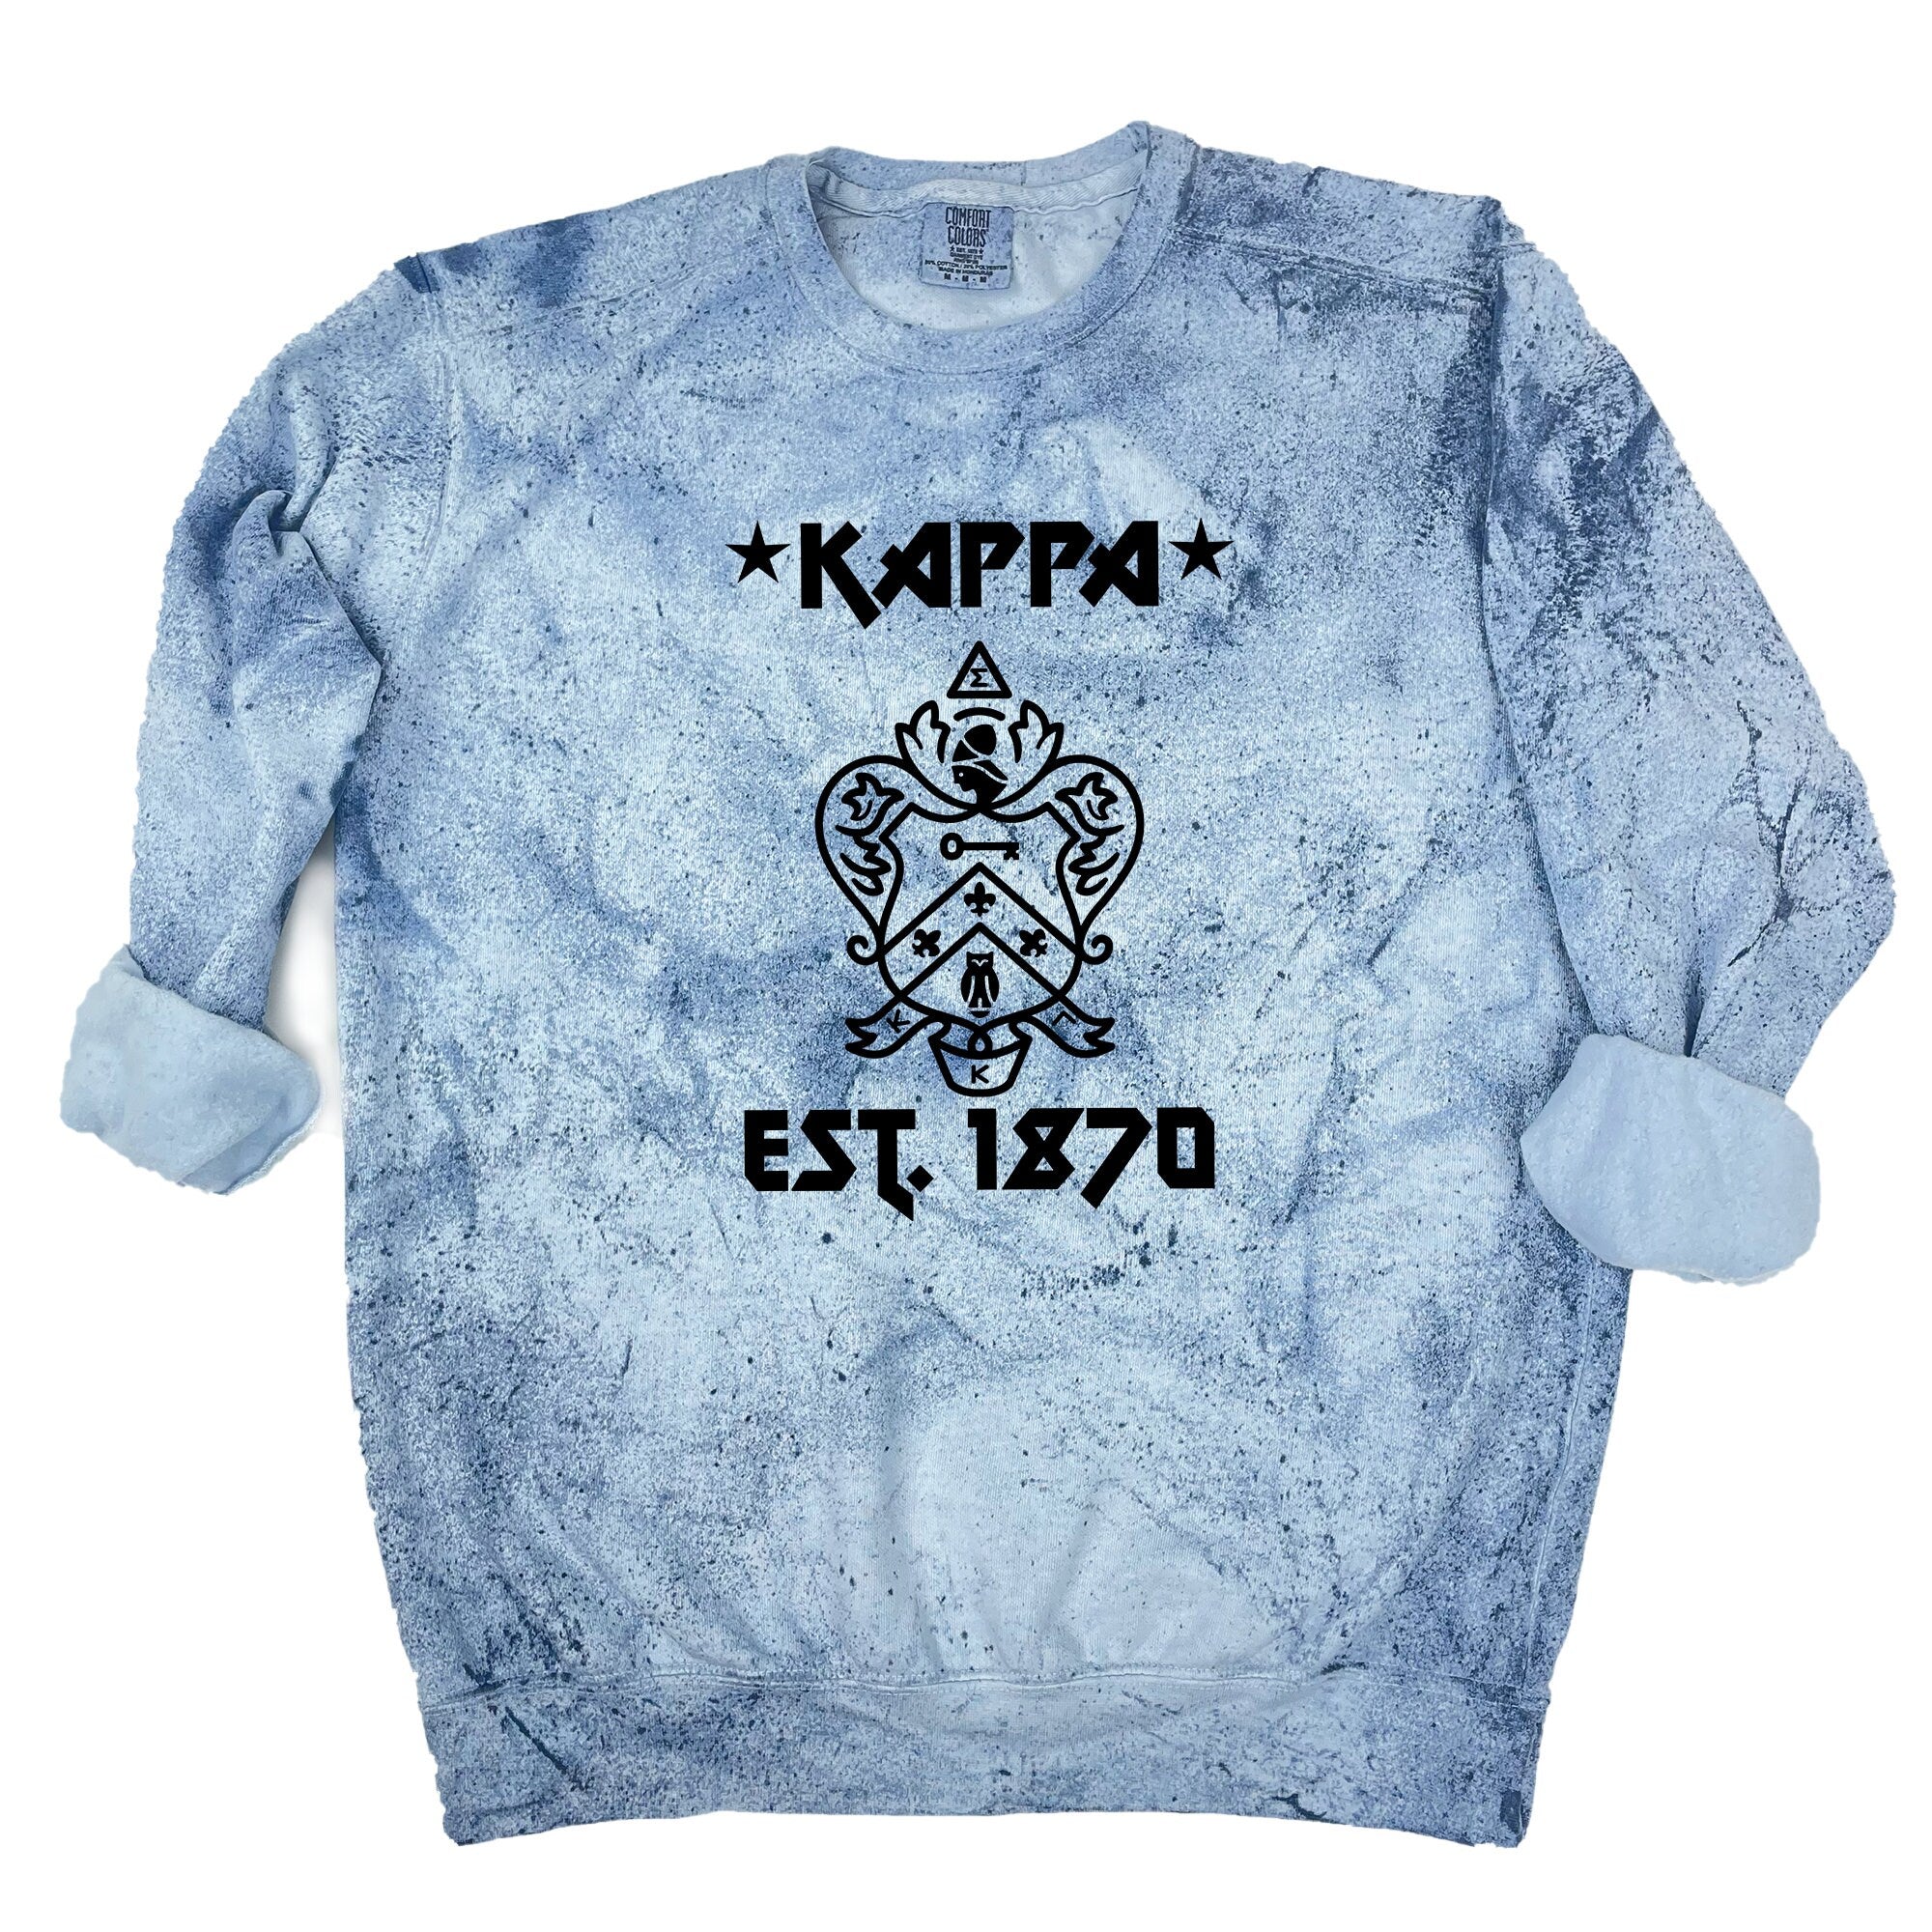 – Band Kappa Gamma Greek Kappa Go Chic Vintage Sweatshirt